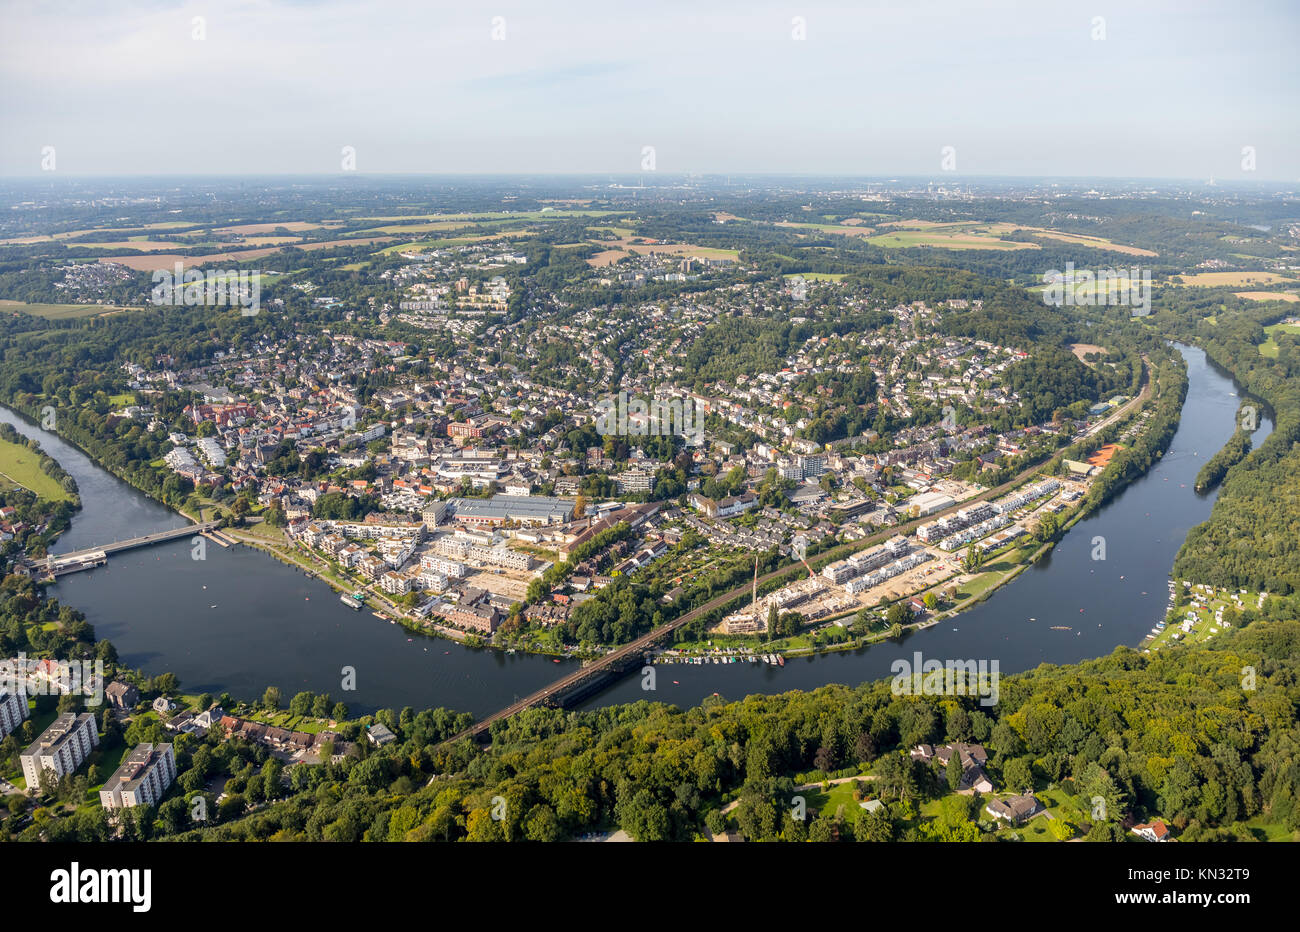 Development Areal Scheidt Halls, Kettwig Ruhrbogen, Pastoratsweg, Essen, North Rhine-Westphalia, Germany, aerial view, aerial view, aerial view, aeria Stock Photo